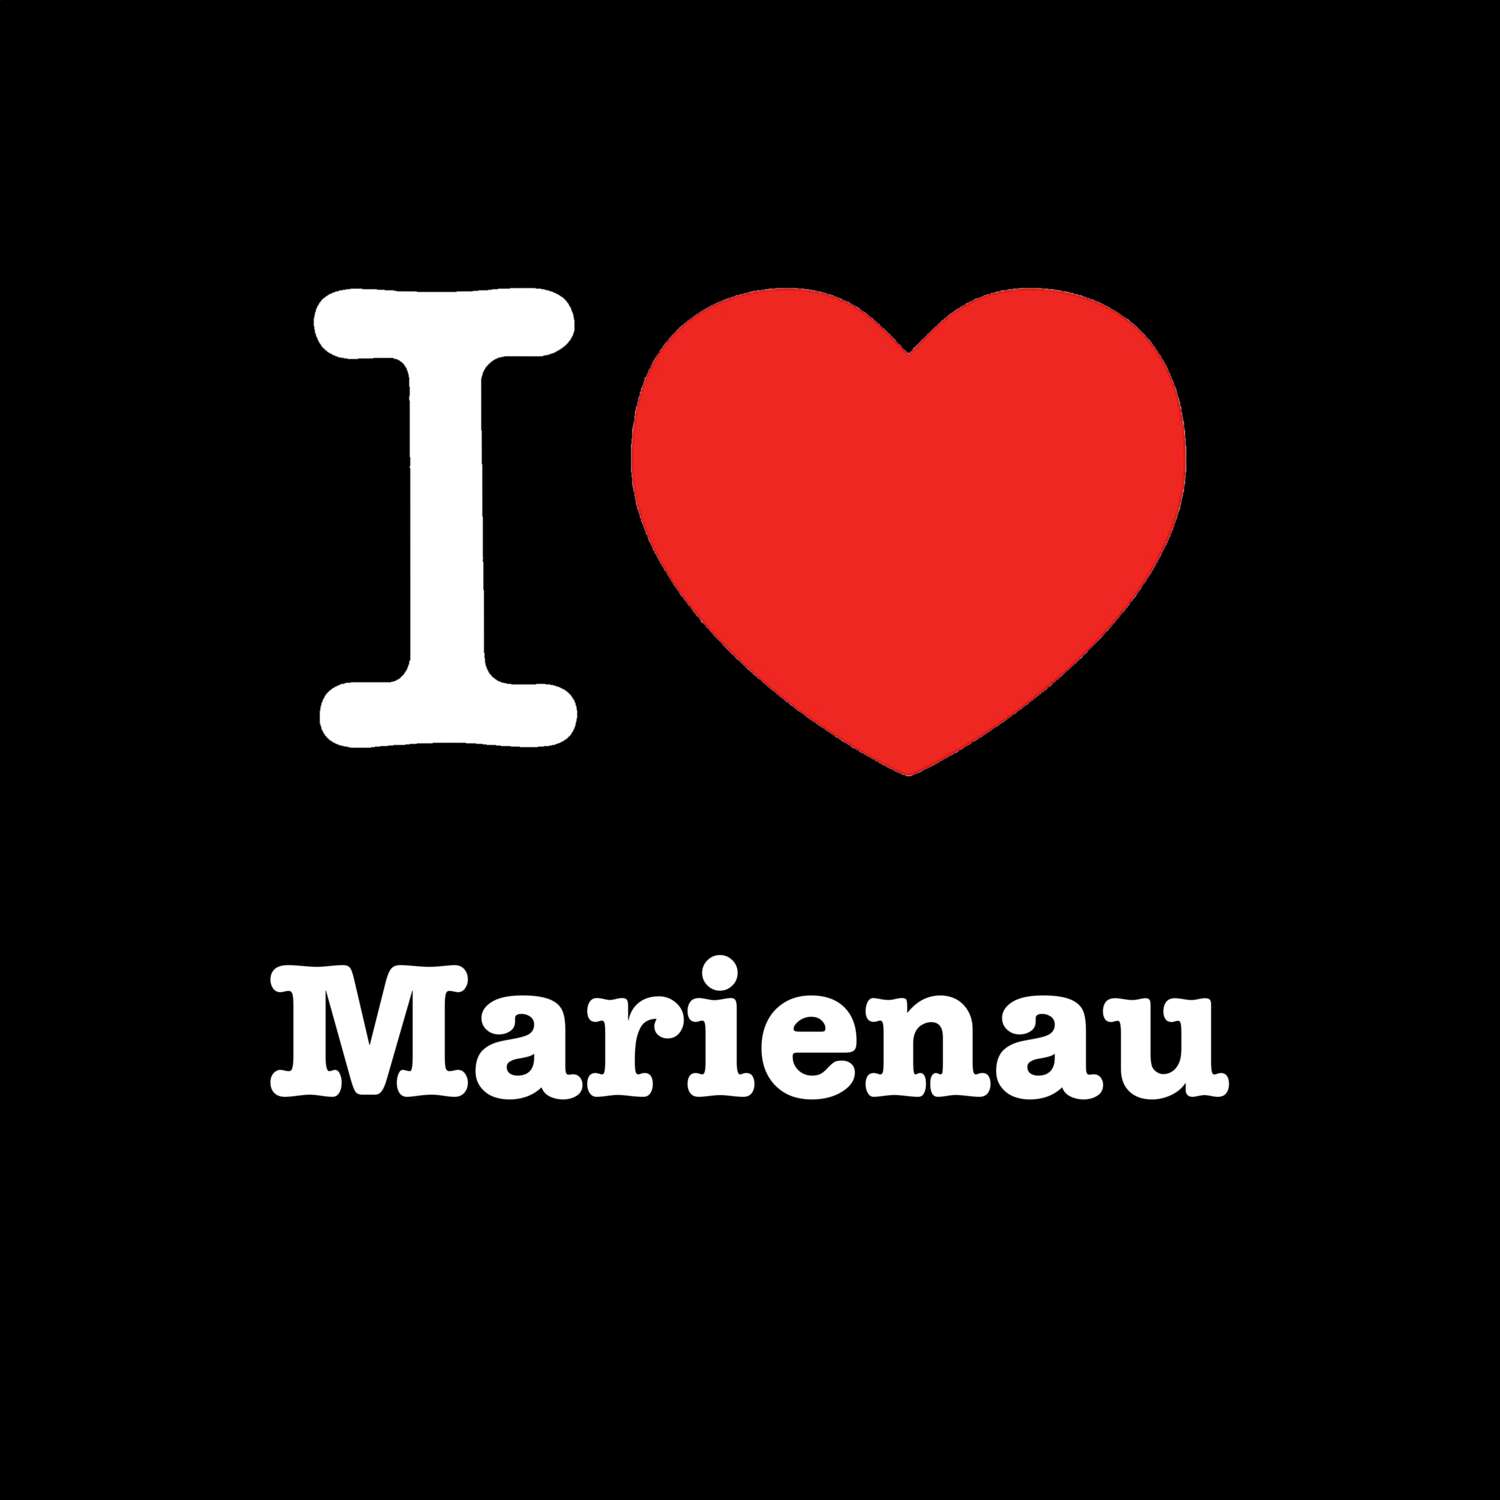 Marienau T-Shirt »I love«